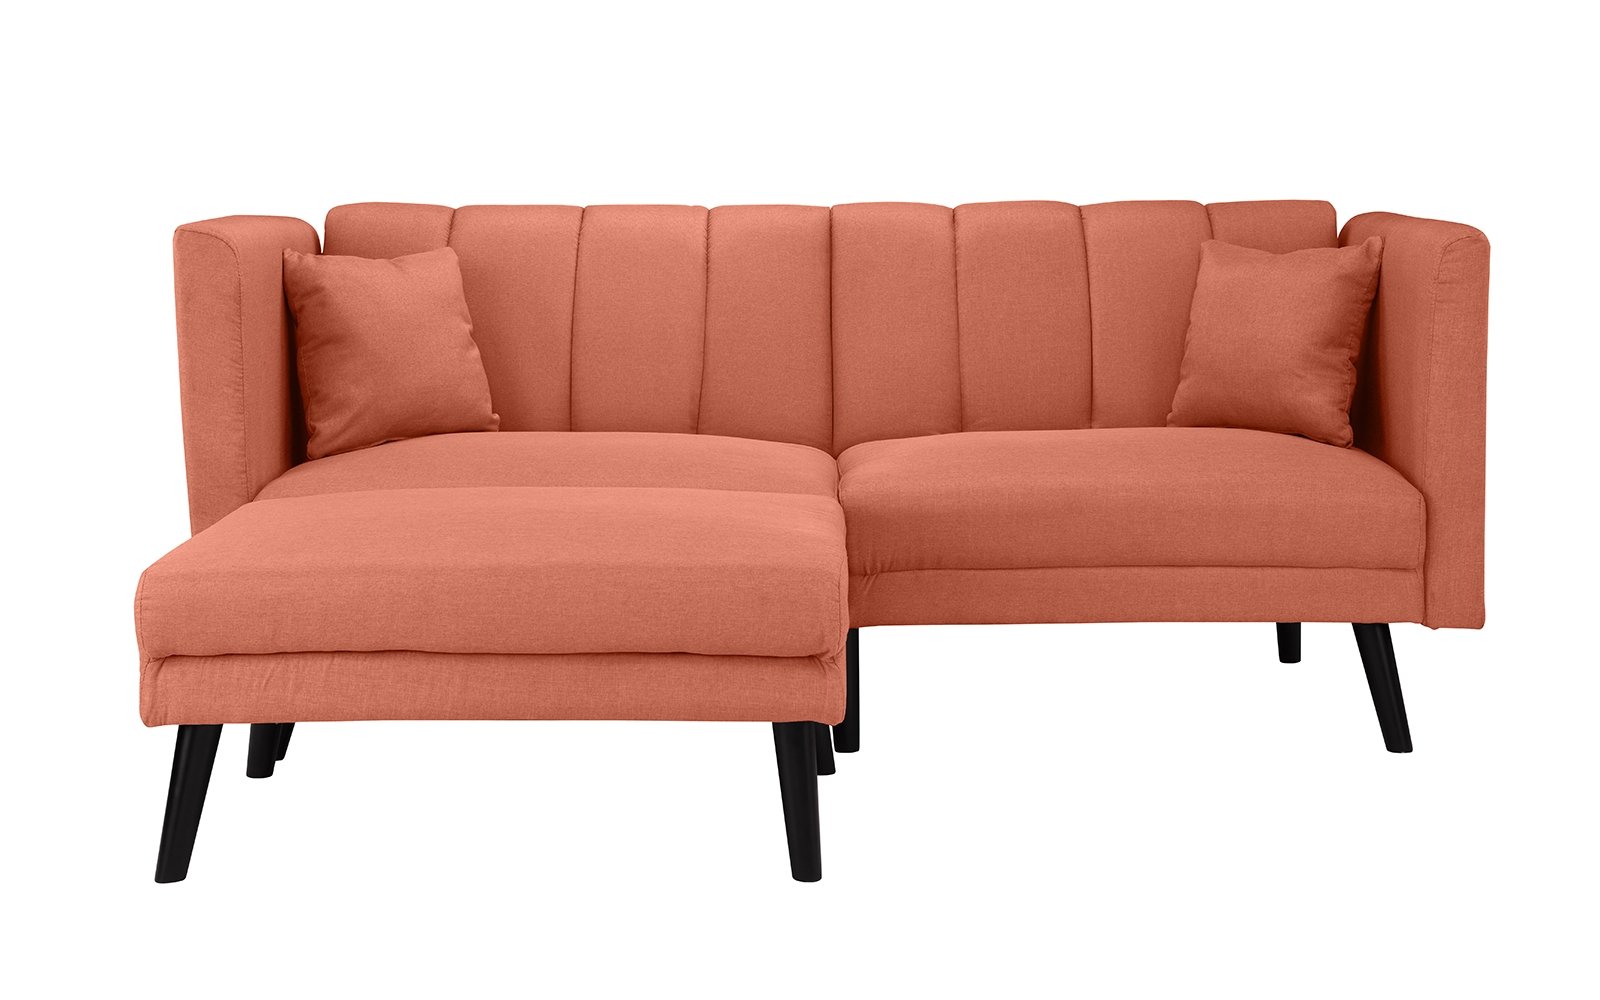 mid century modern futon sofa bed